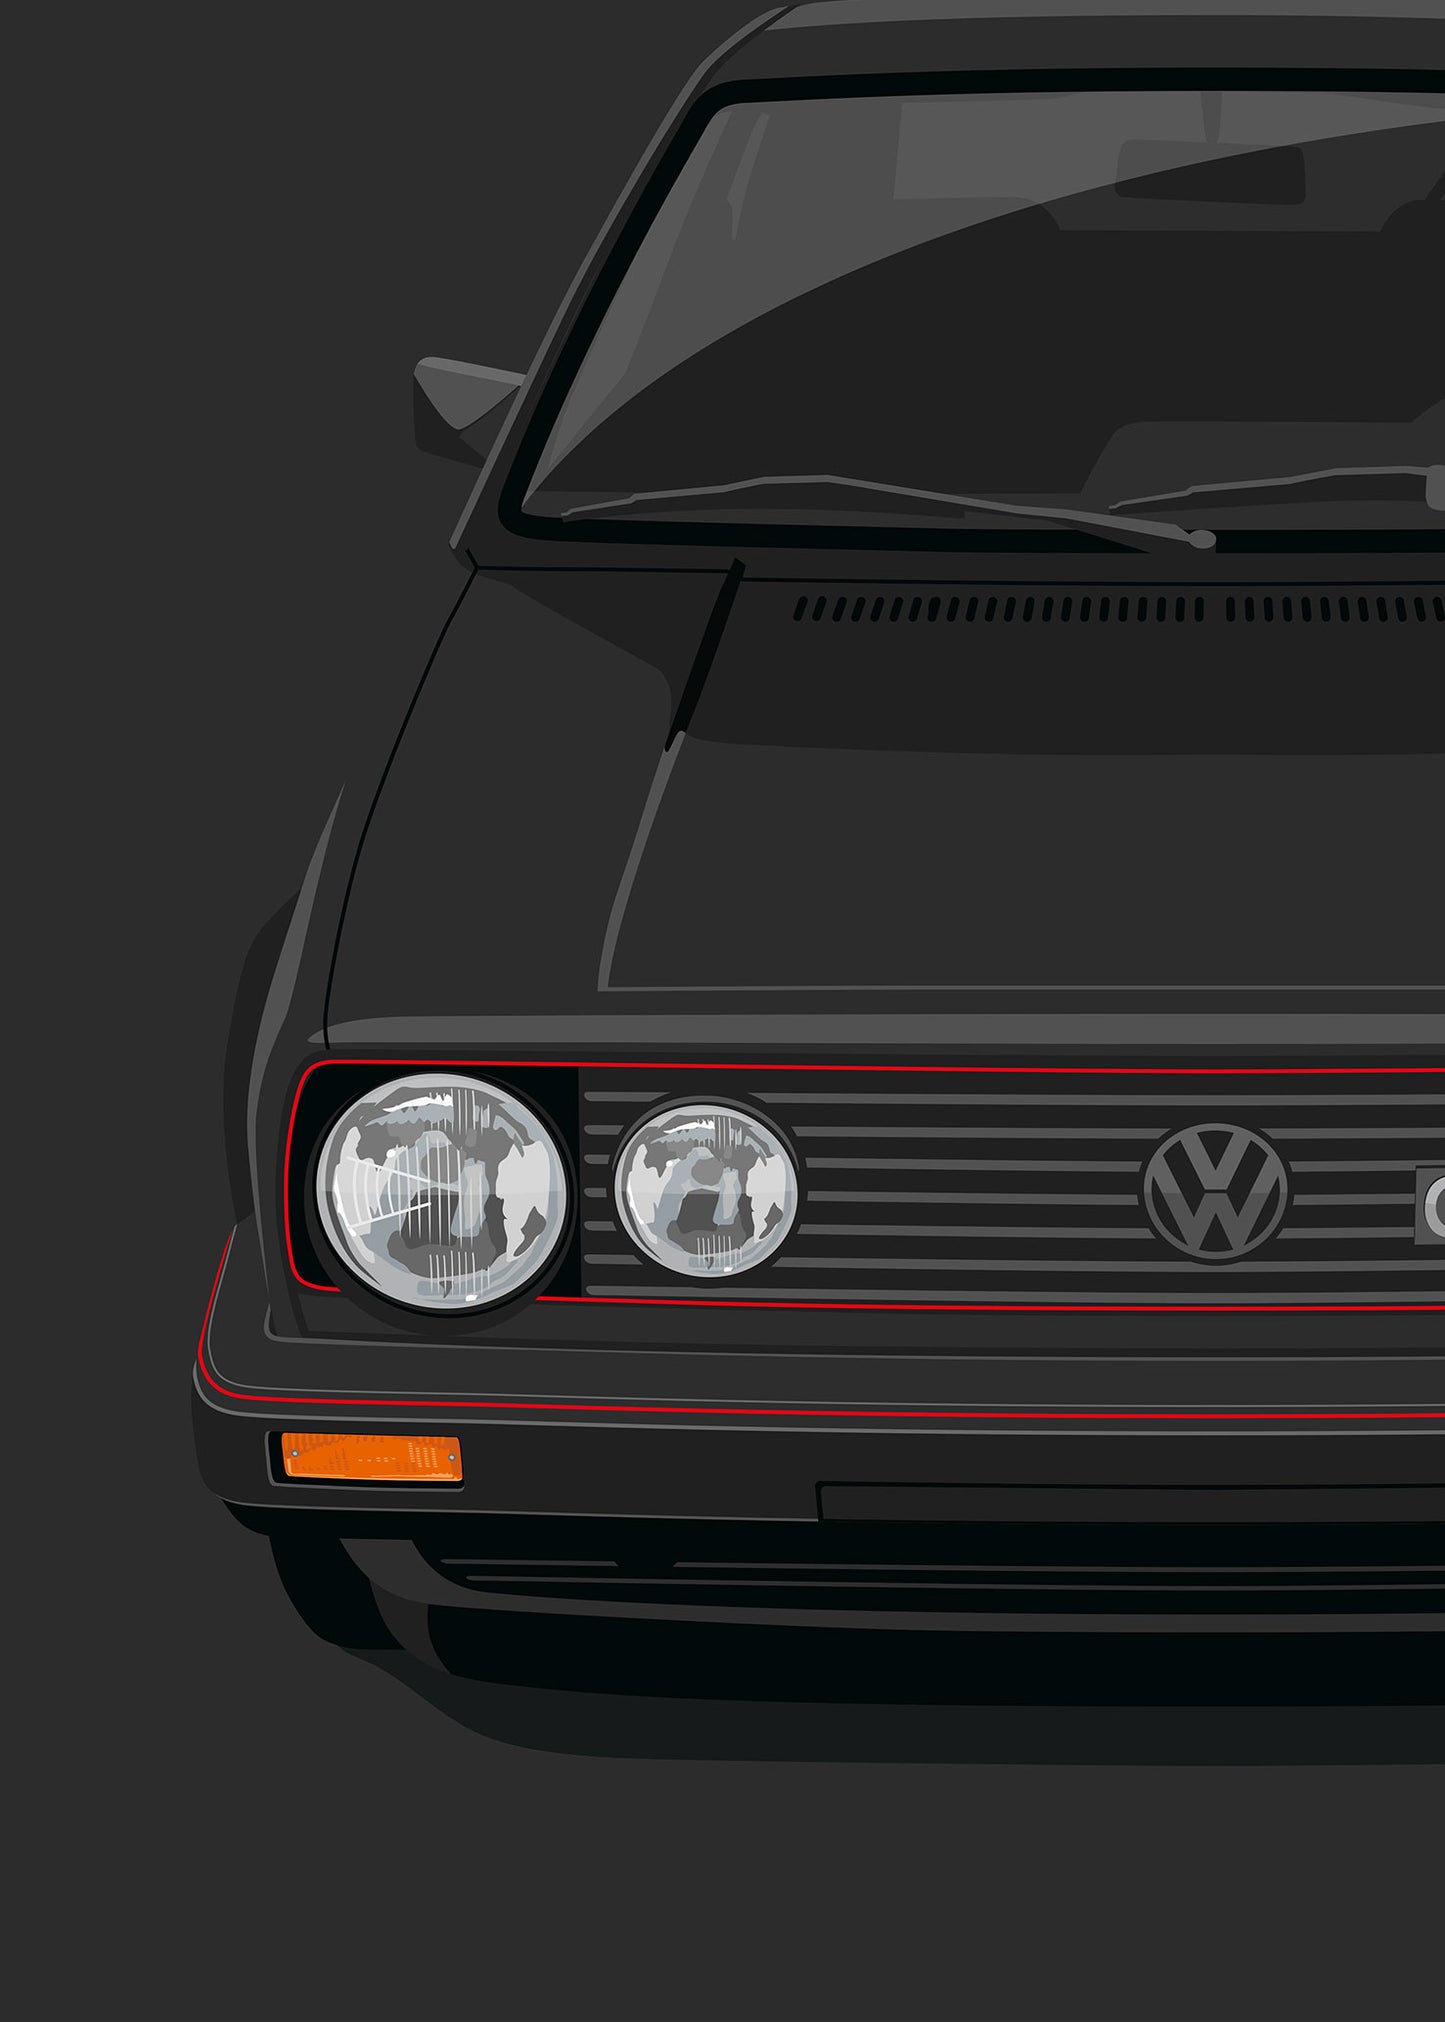 1984 Volkswagen Golf GTI (Mk2) - Black - poster print